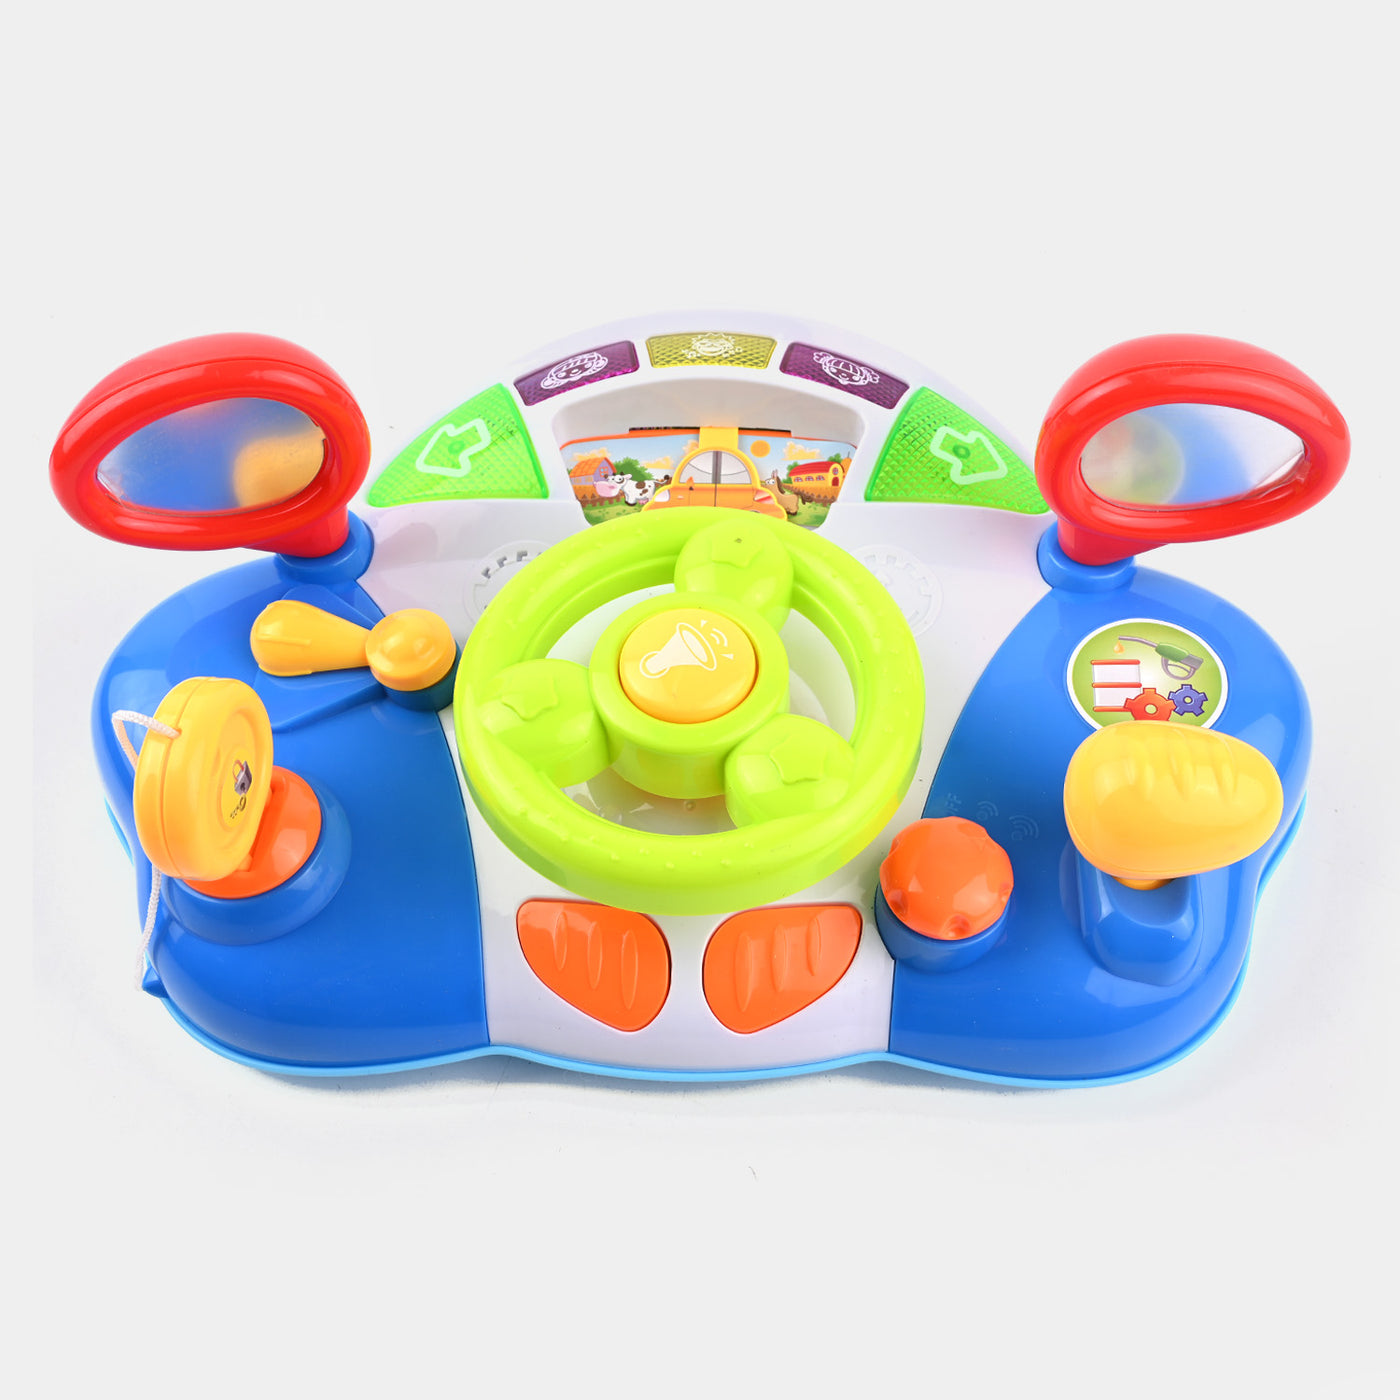 Dynamic Navigation-Bridge Steering Toy For Babies